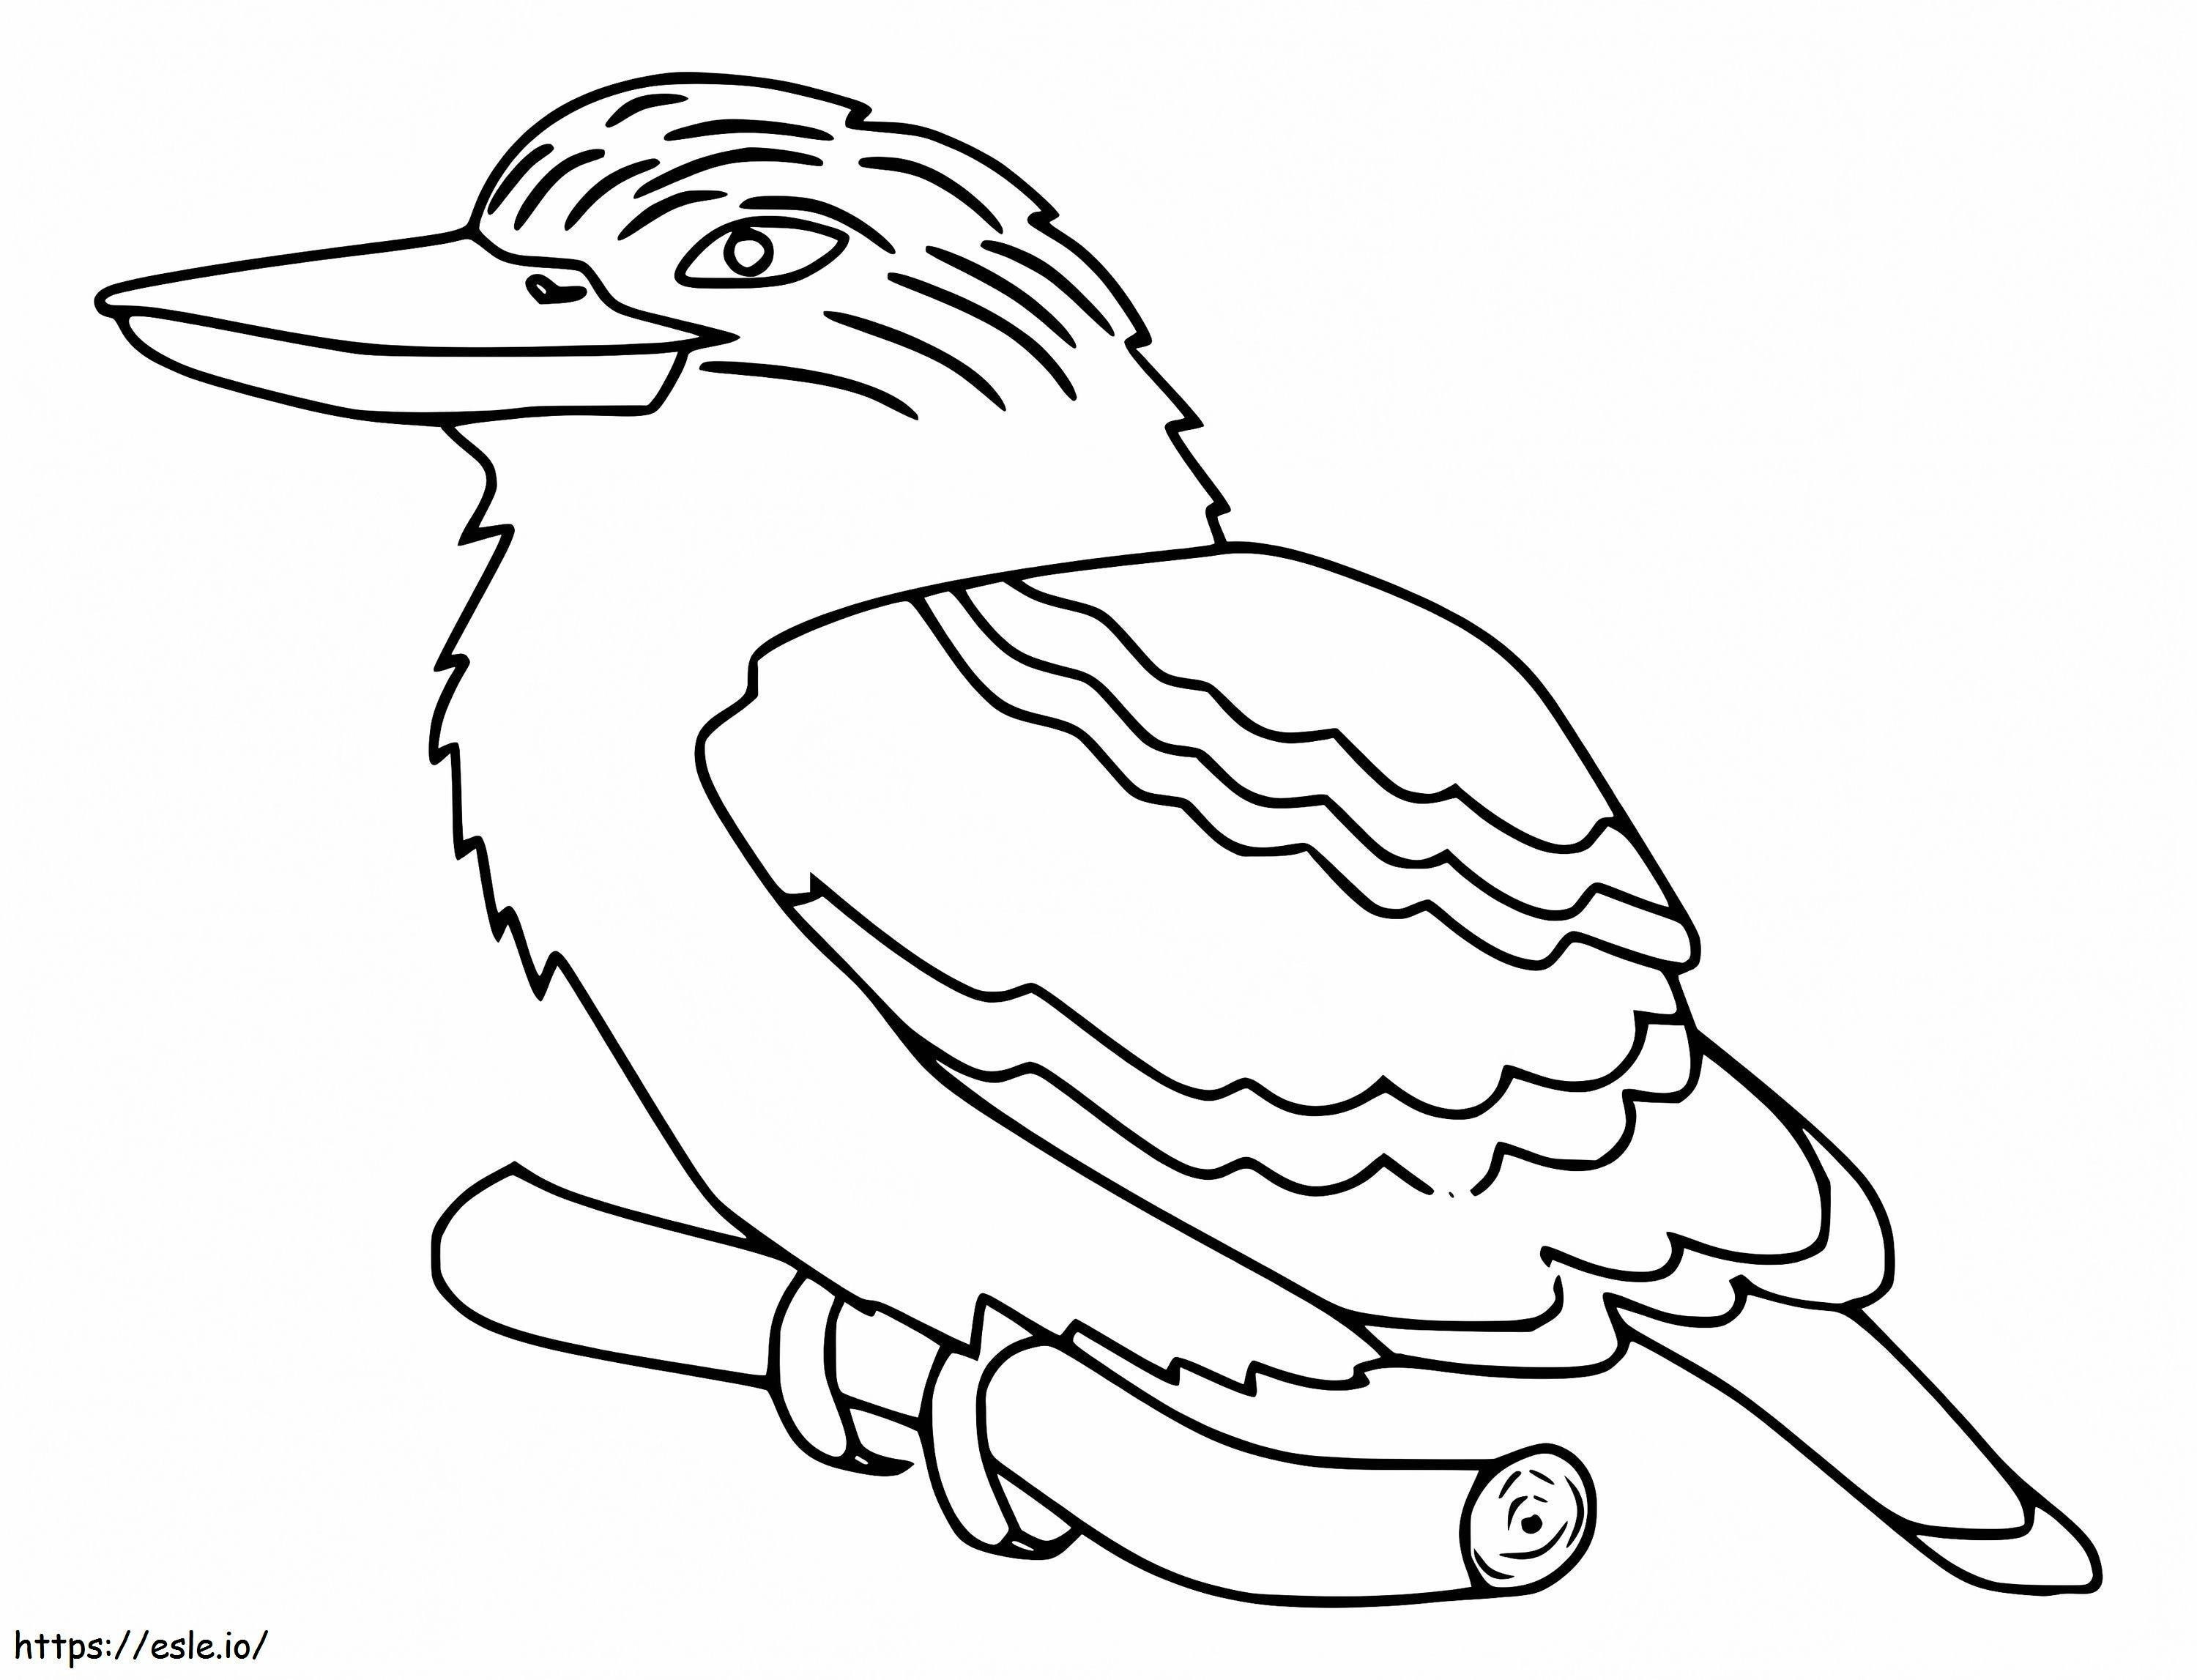 Free Printable Kookaburra coloring page